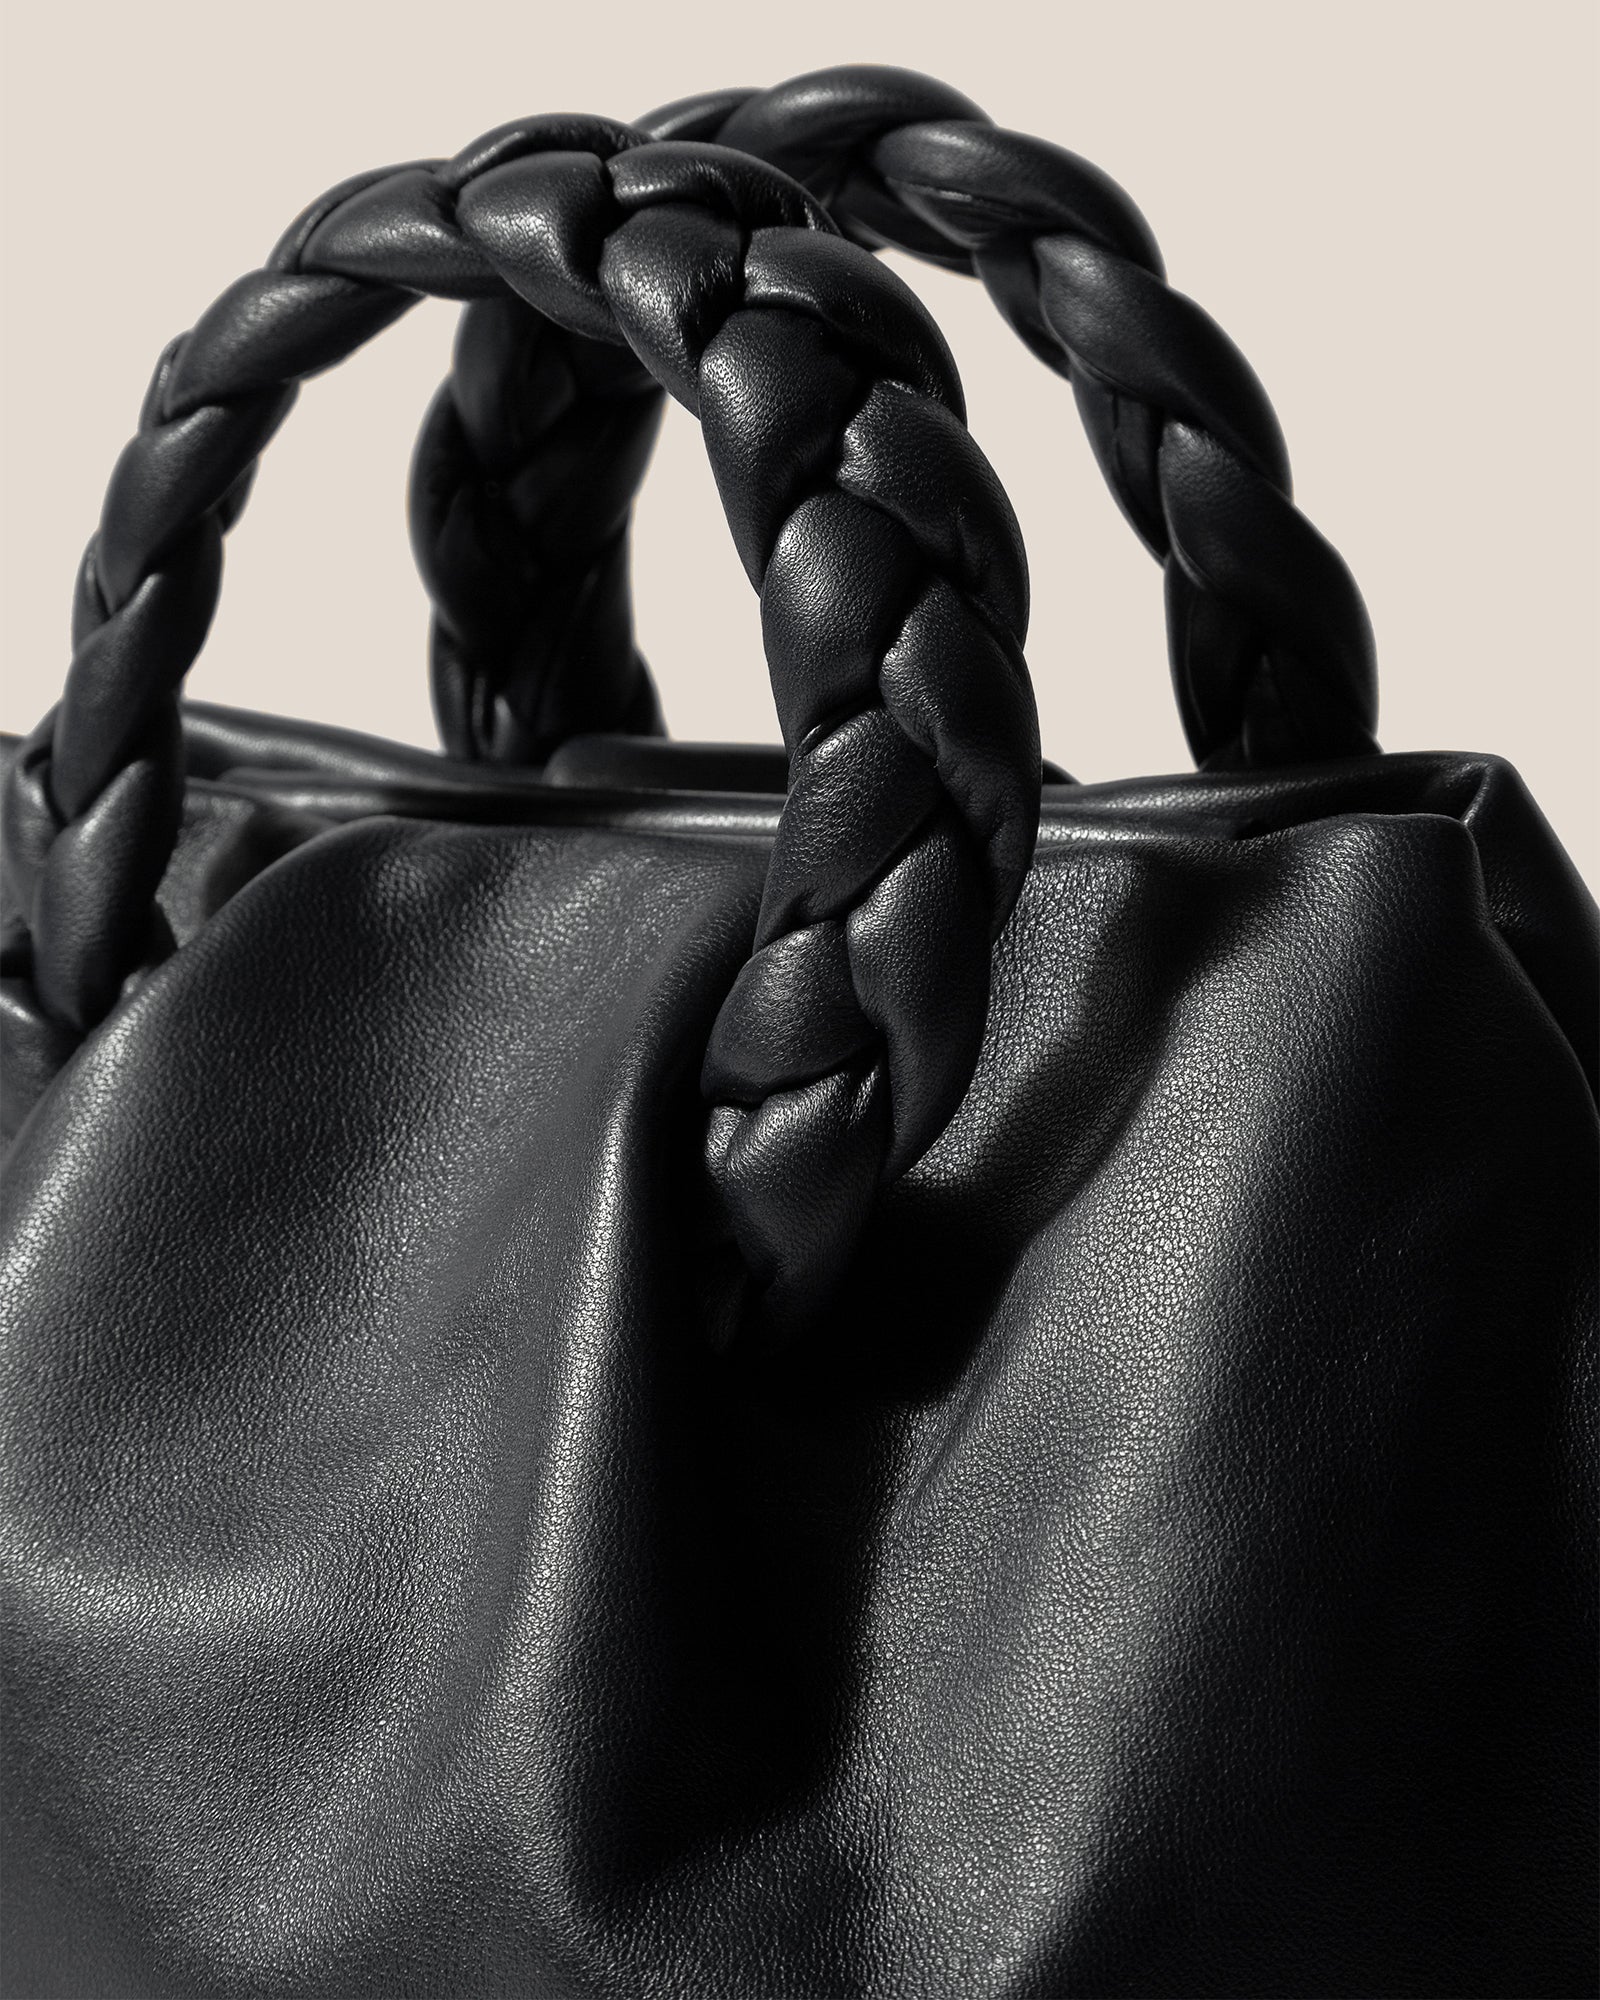 HEREU Bombon Braided Leather Top-Handle Bag